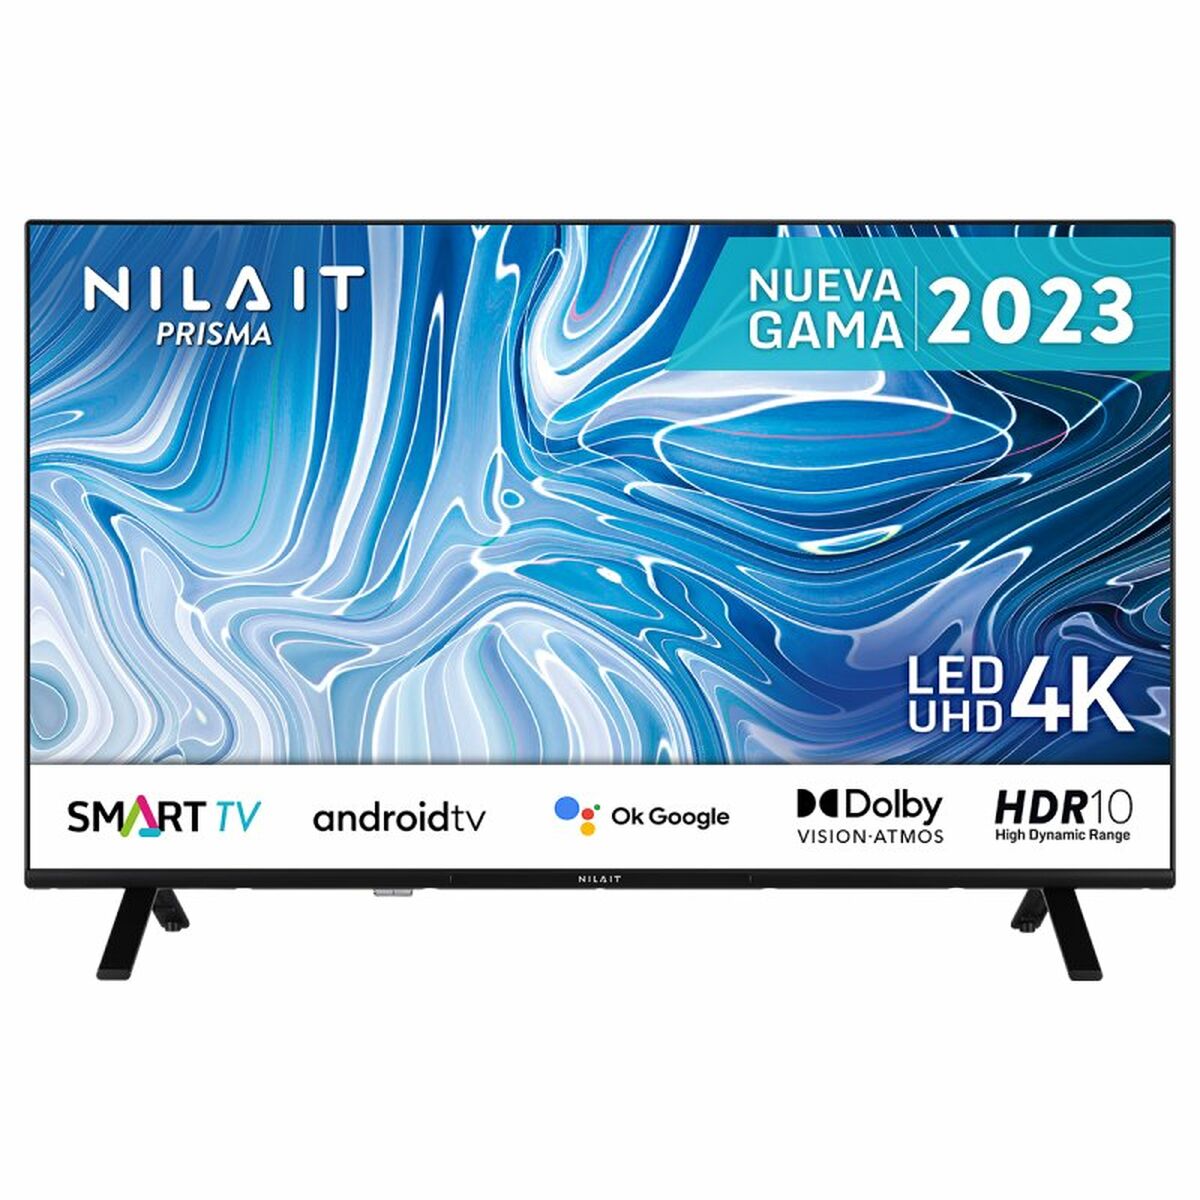 Smart TV Nilait Prisma 43UB7001S 4K Ultra HD 43", Nilait, Electronics, TV, Video and home cinema, smart-tv-nilait-prisma-43ub7001s-4k-ultra-hd-43, :43 INCH or 109.2 CM, :Ultra HD, Brand_Nilait, category-reference-2609, category-reference-2625, category-reference-2931, category-reference-t-18805, category-reference-t-19653, cinema and television, Condition_NEW, entertainment, Price_700 - 800, RiotNook